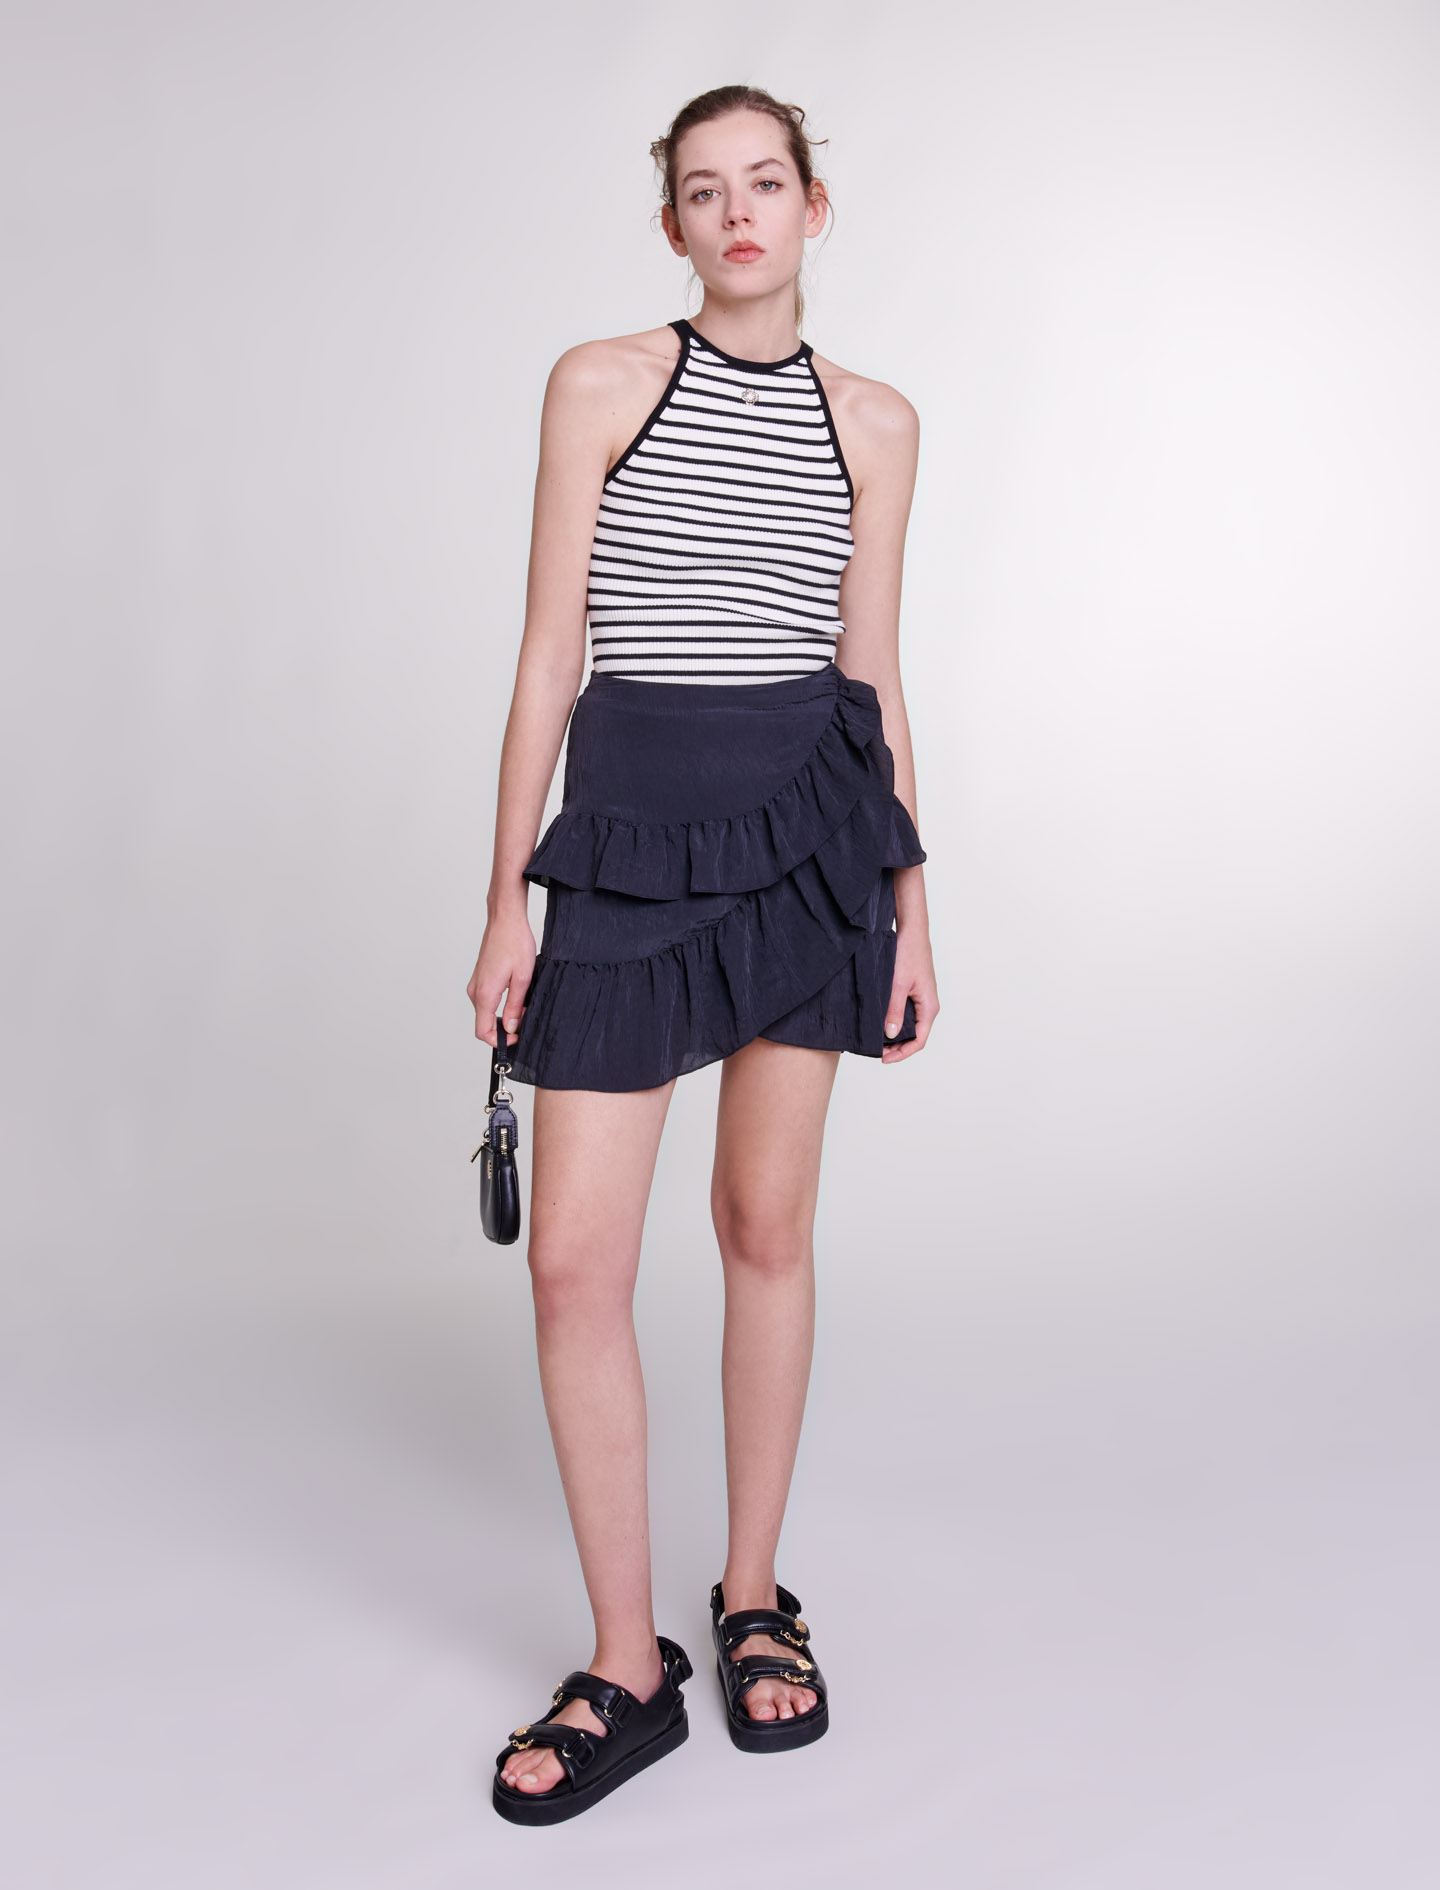 Maje Woman's polyester, Short ruffled skirt for Spring/Summer, in color Black / Black